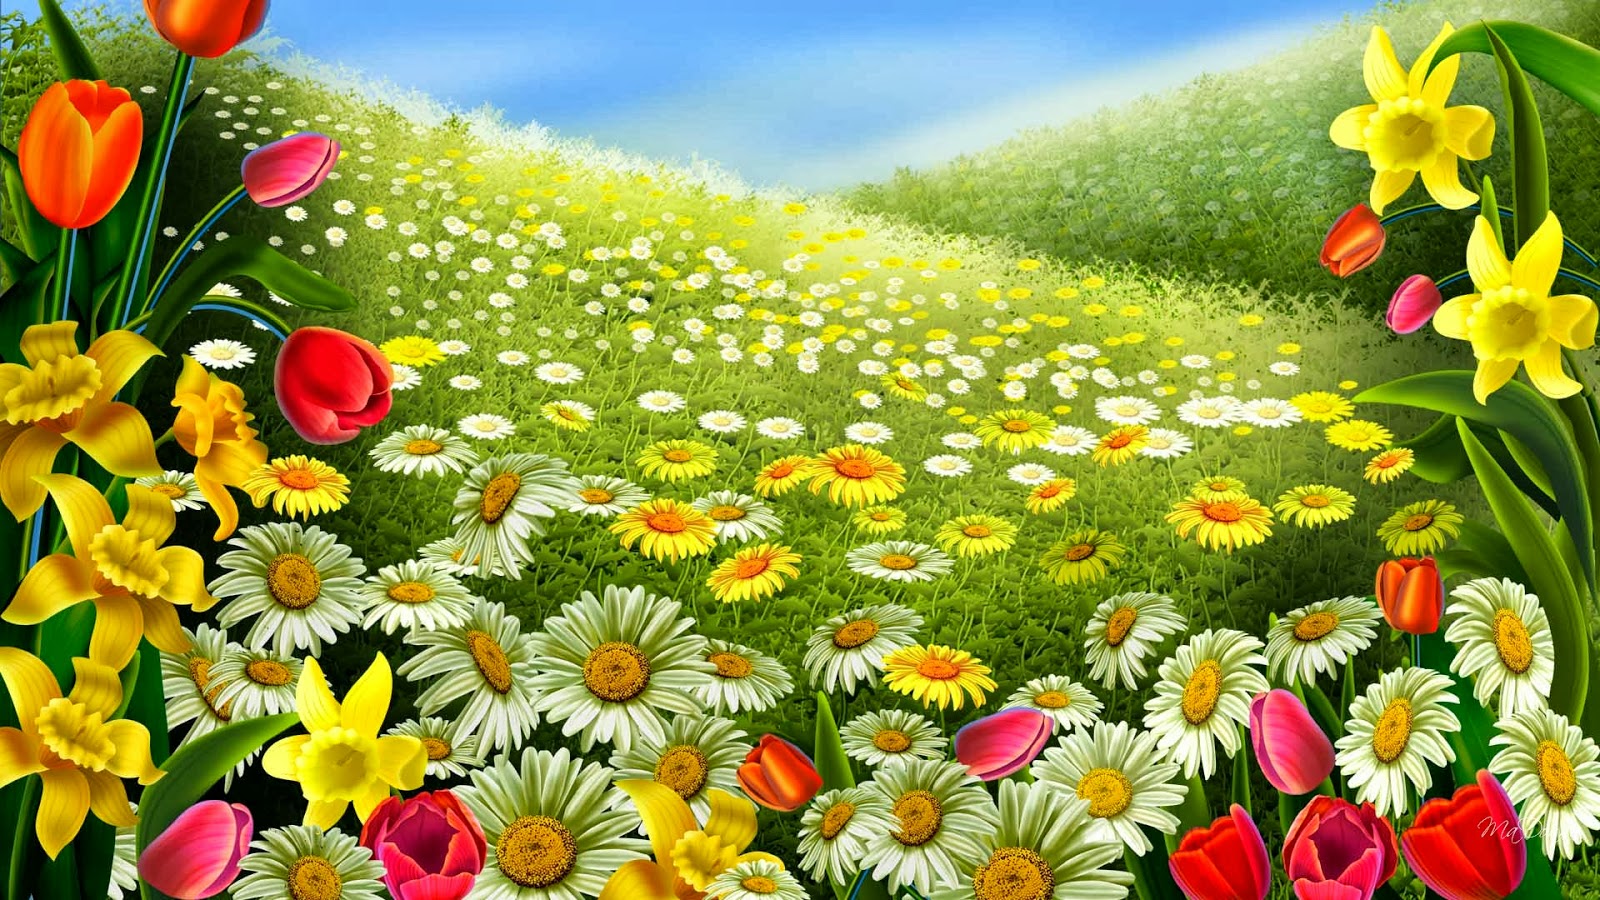 30 Wallpaper Bunga Cantik | Deloiz Wallpaper